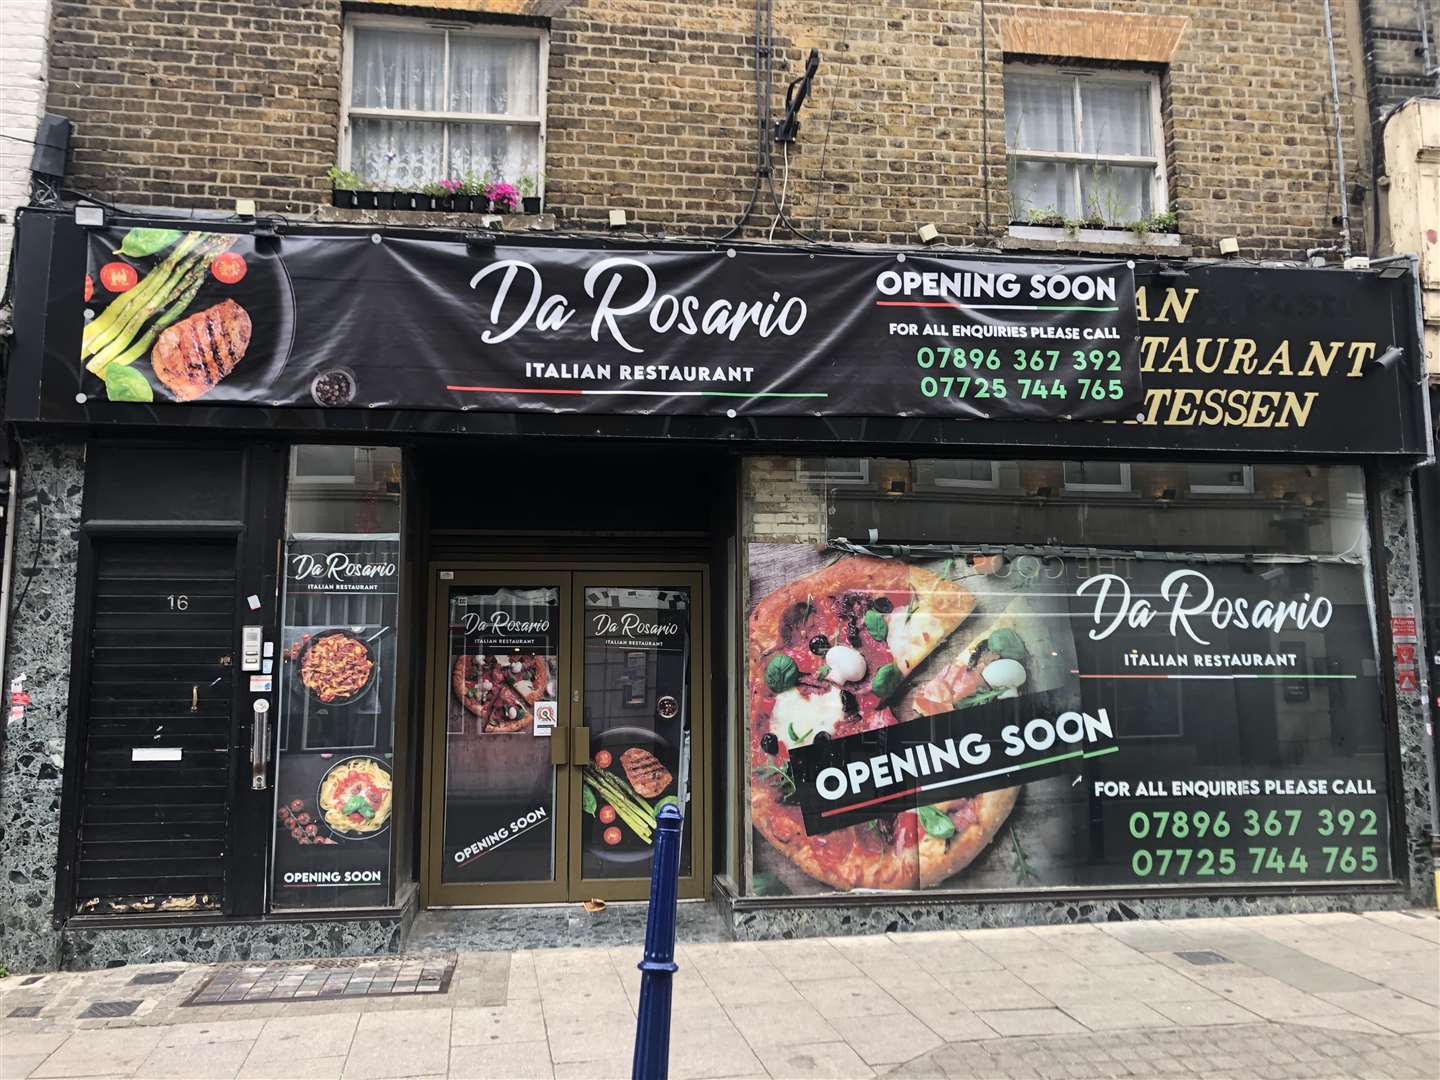 Italian restaurant Da Rosario is coming soon to King Street, Gravesend